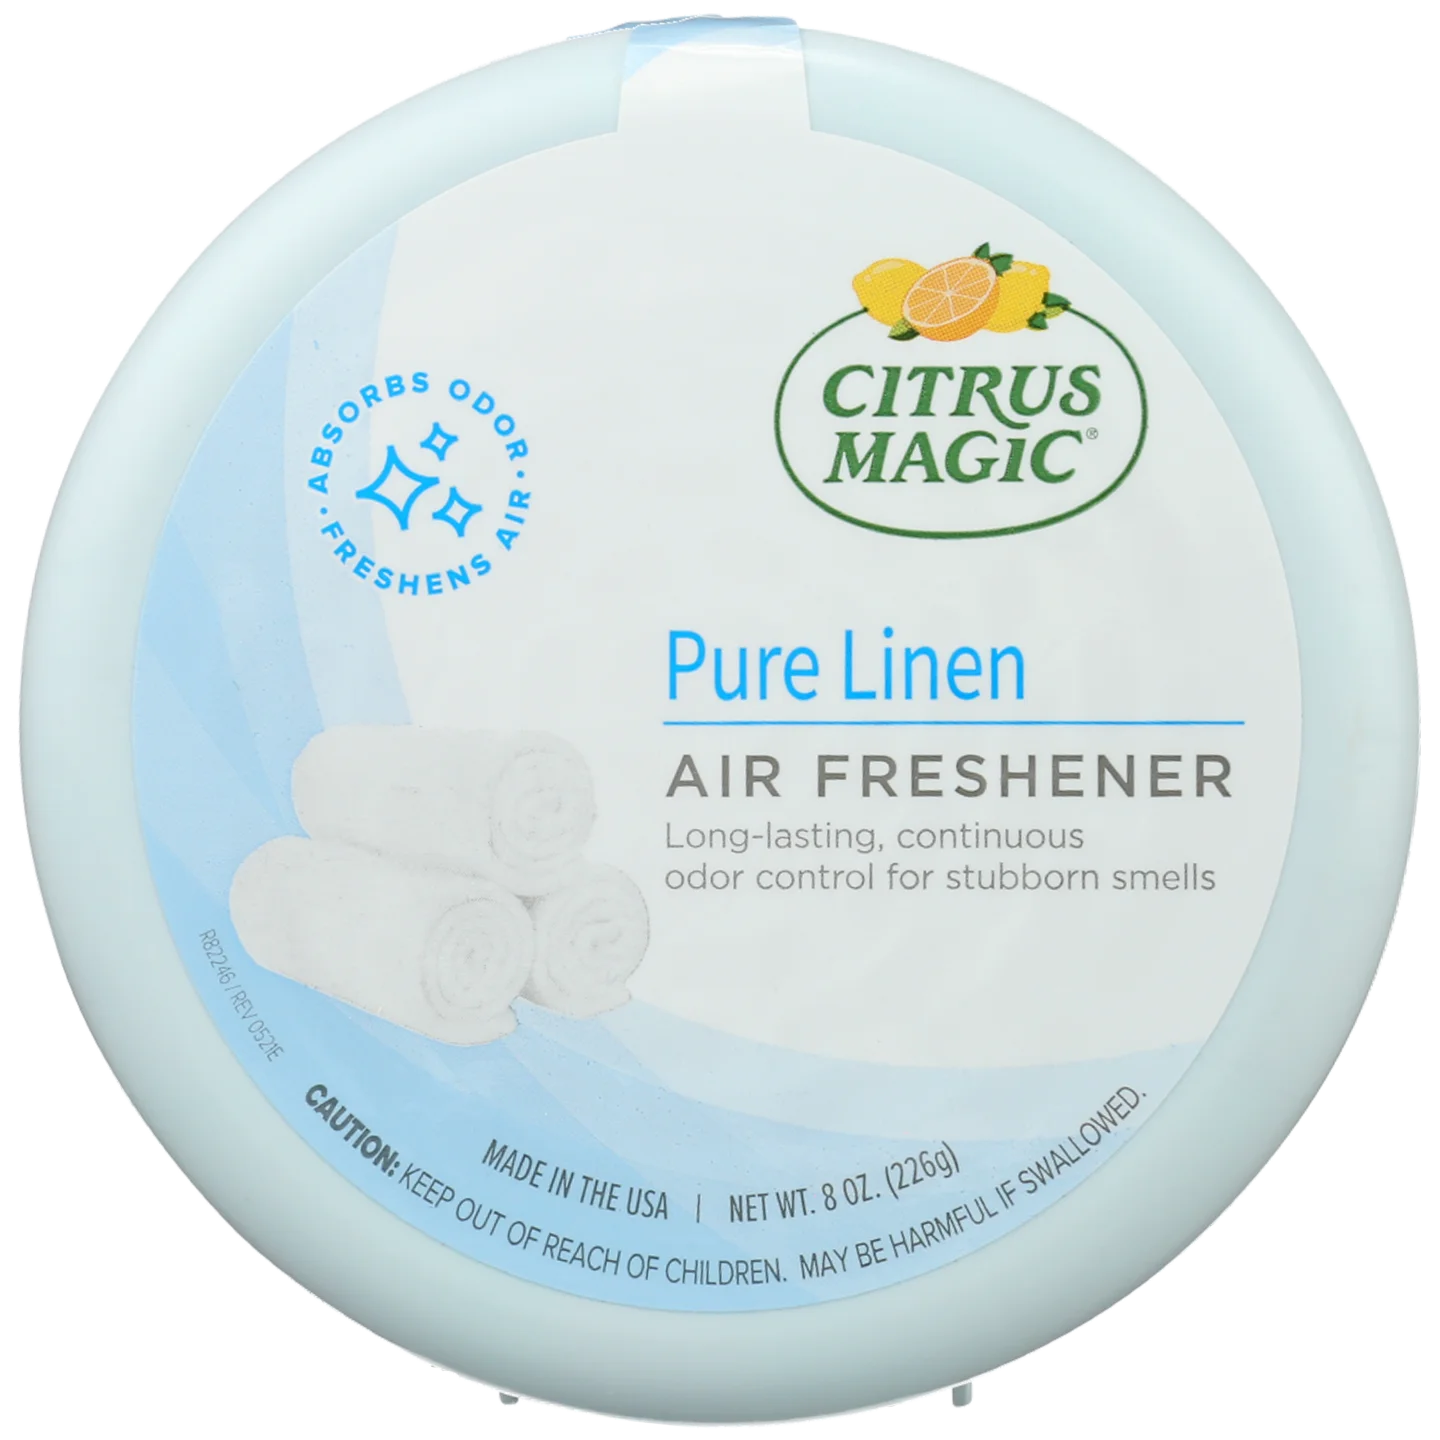 Odor Elimination - Citrus Magic Odor Absorbing Solid Air Freshener, Pure  Linen